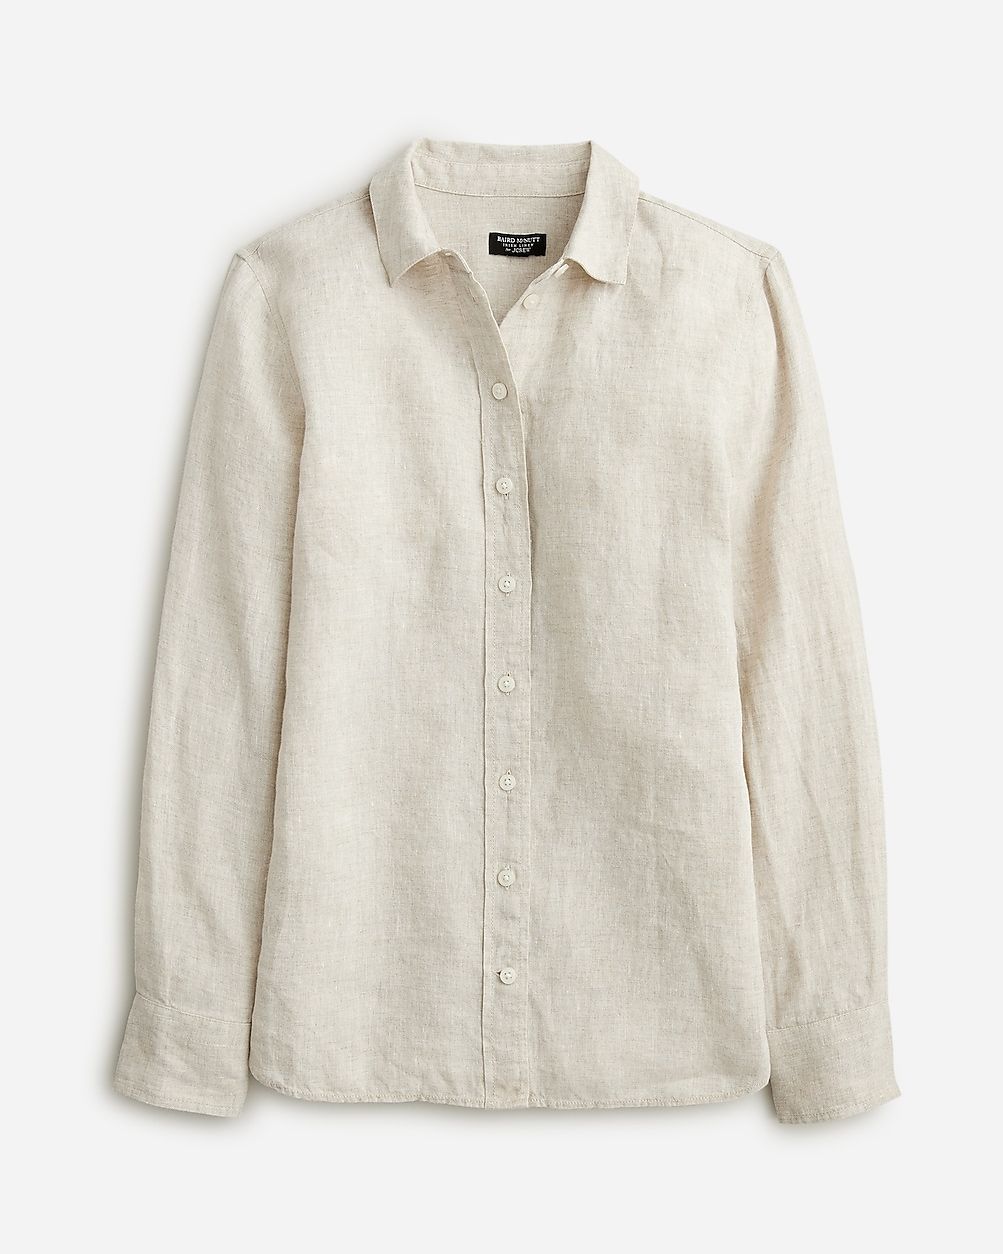 Wren slim shirt in Baird McNutt Irish linen | J.Crew US